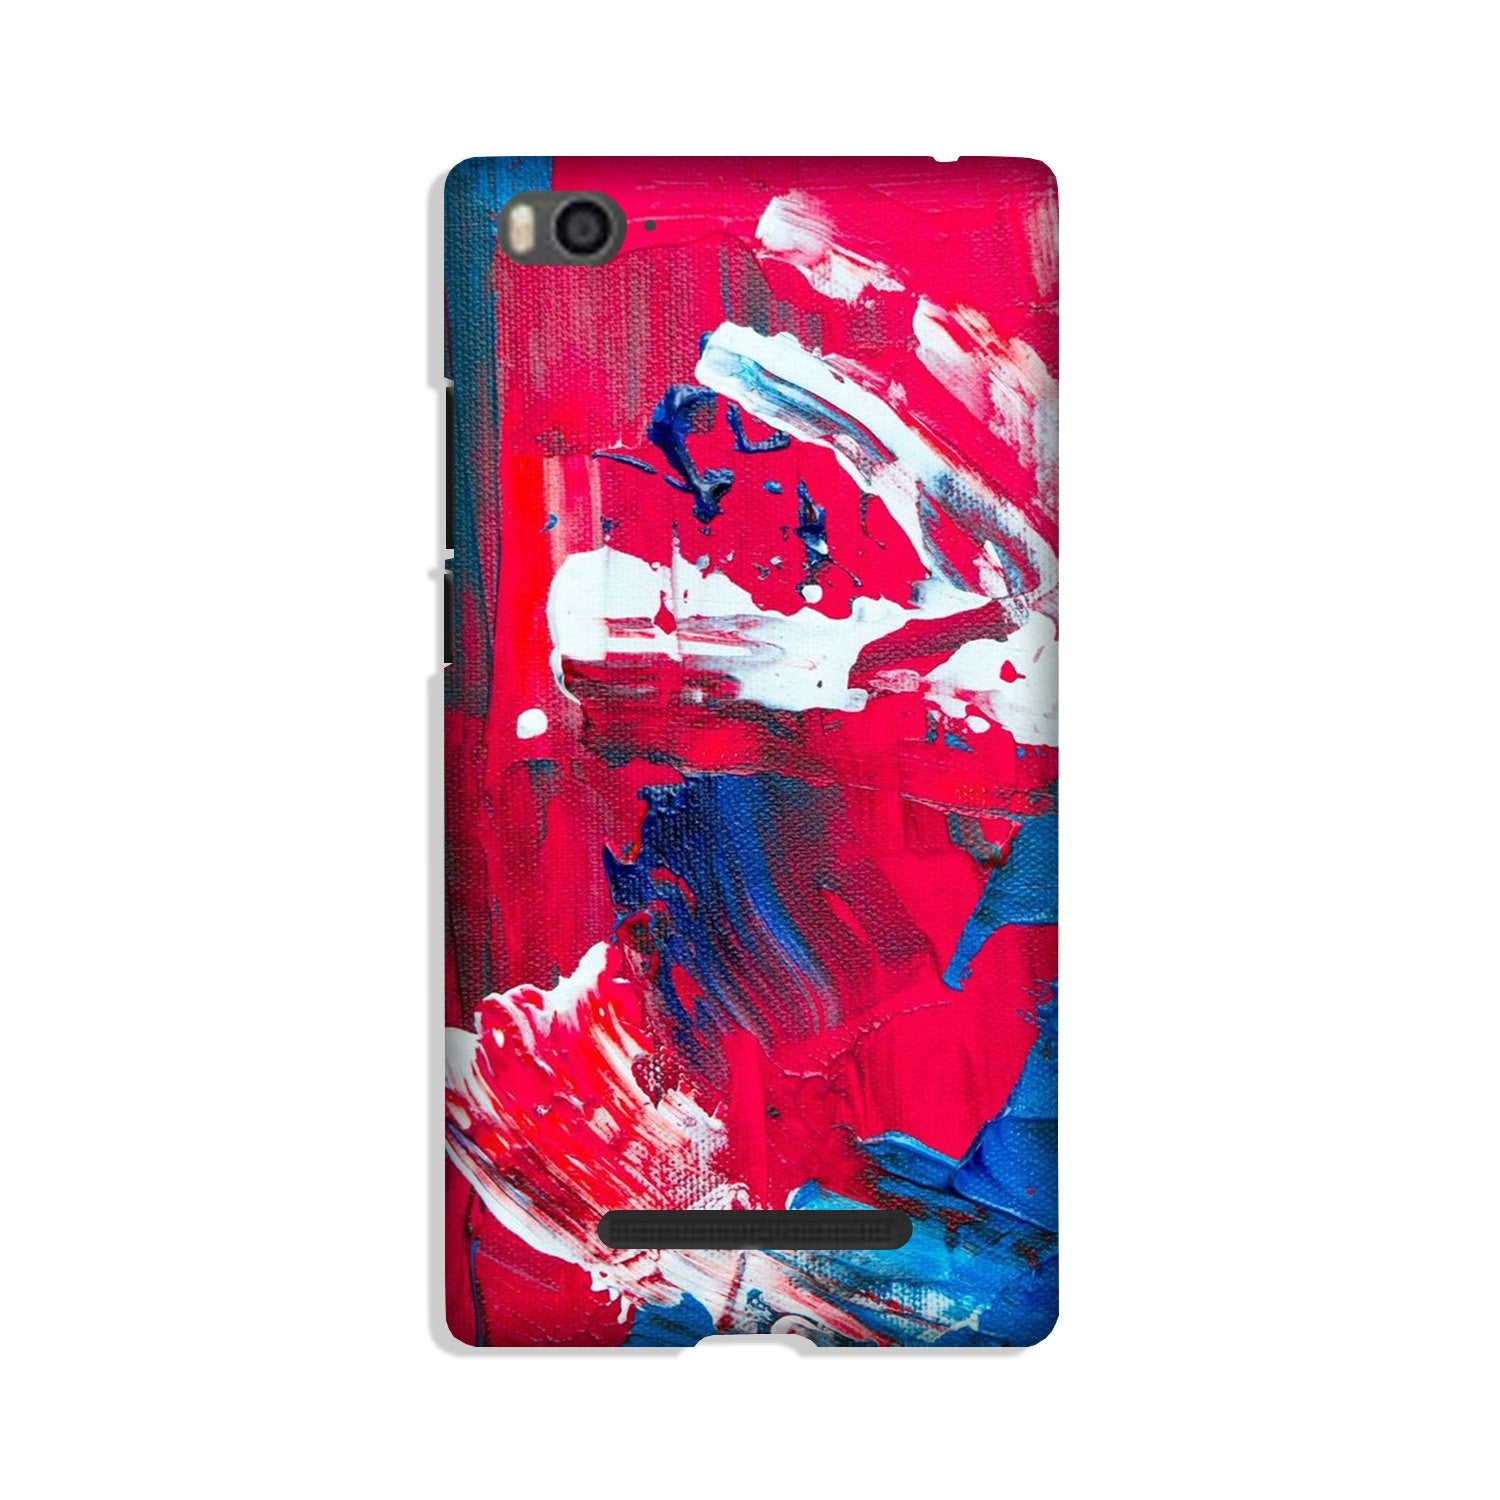 Modern Art Case for Xiaomi Mi 4i (Design No. 228)